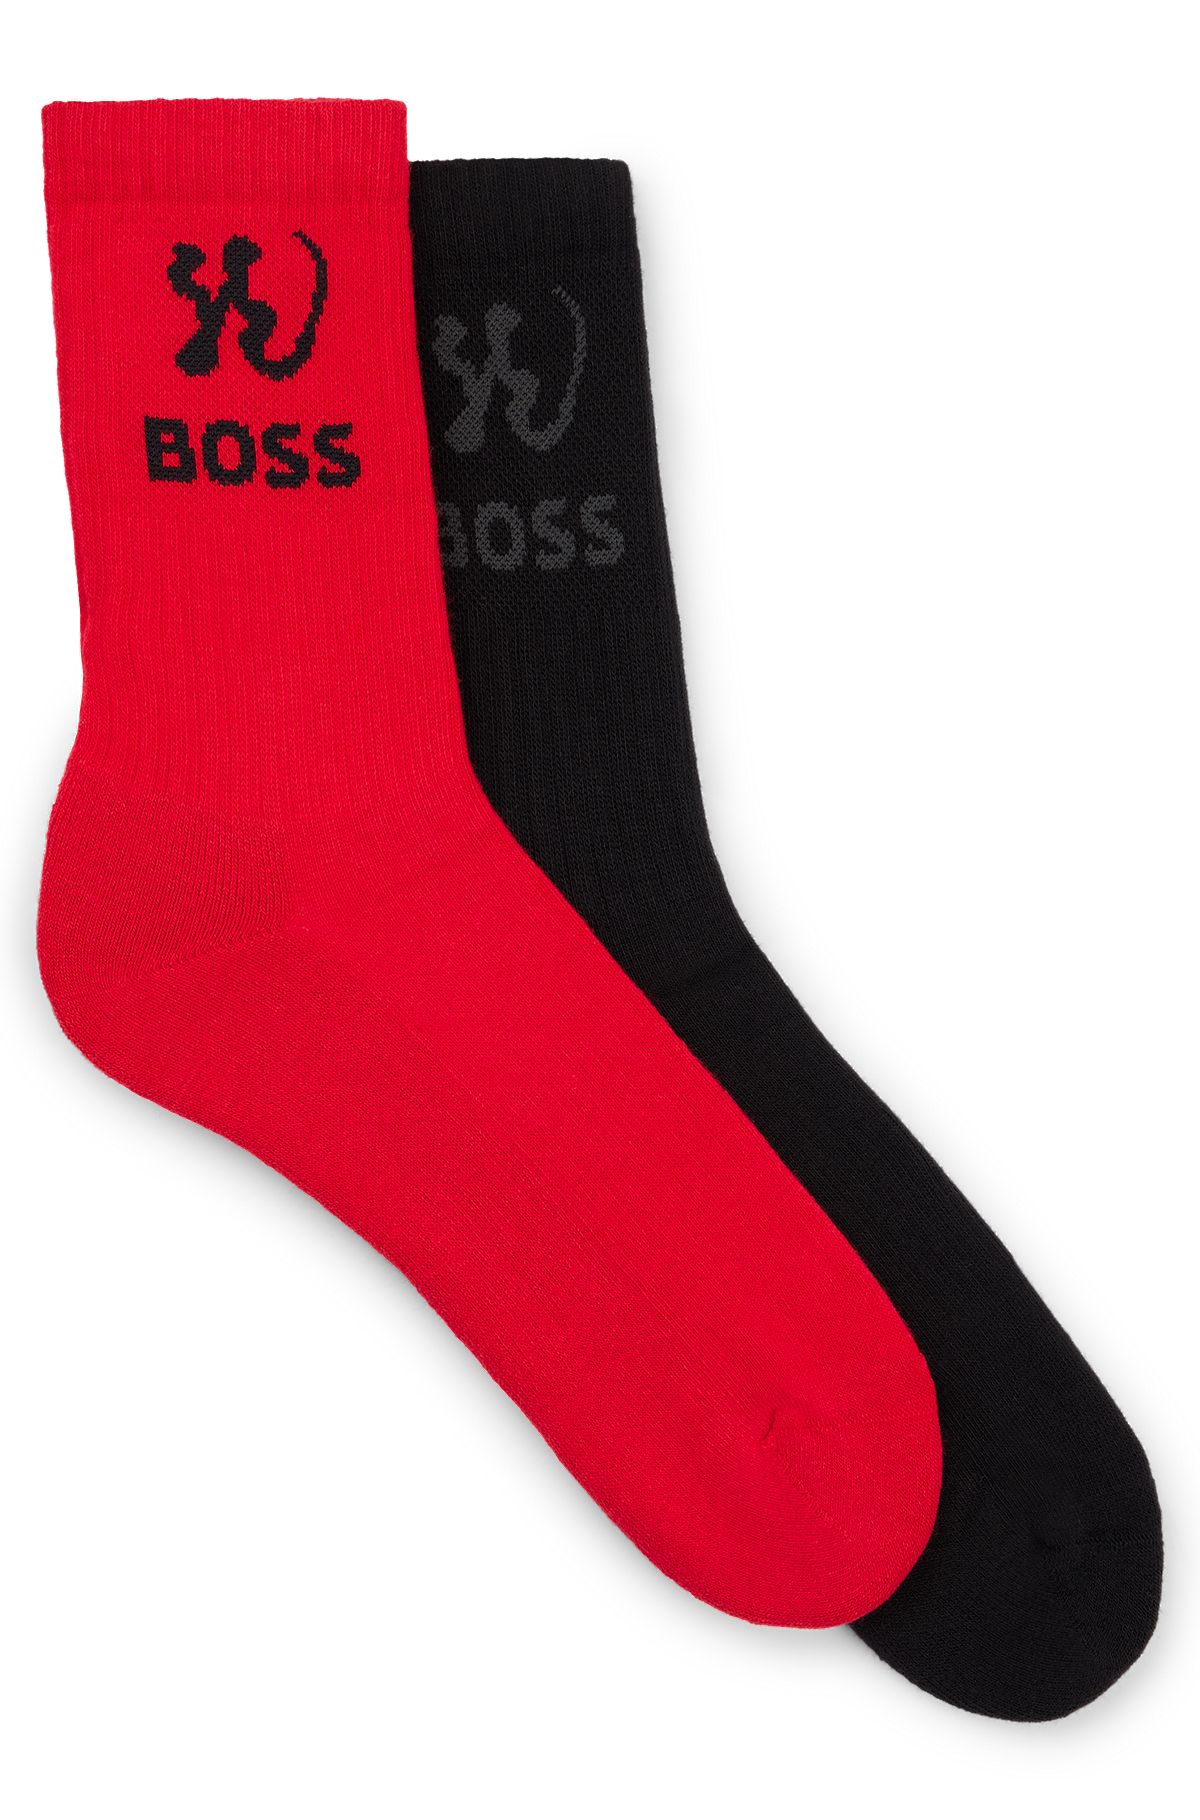 Zweier-Pack kurze Socken mit speziellem Artwork, Schwarz / Rot